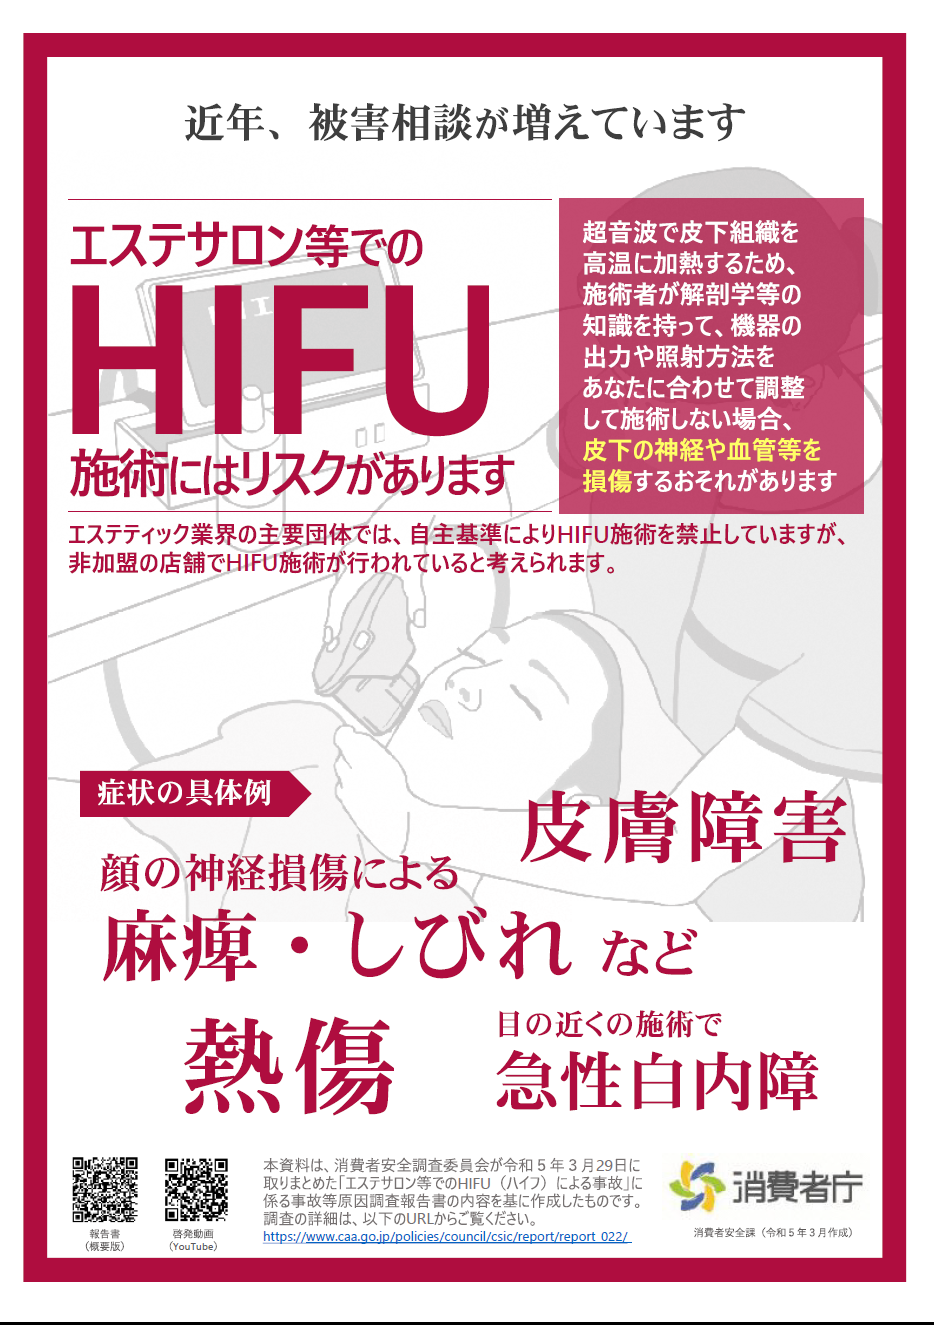 HIFU注意喚起1 HIFU施術での症状の具体例が記入されています。皮膚障害・麻痺・しびれ・急性白内障など